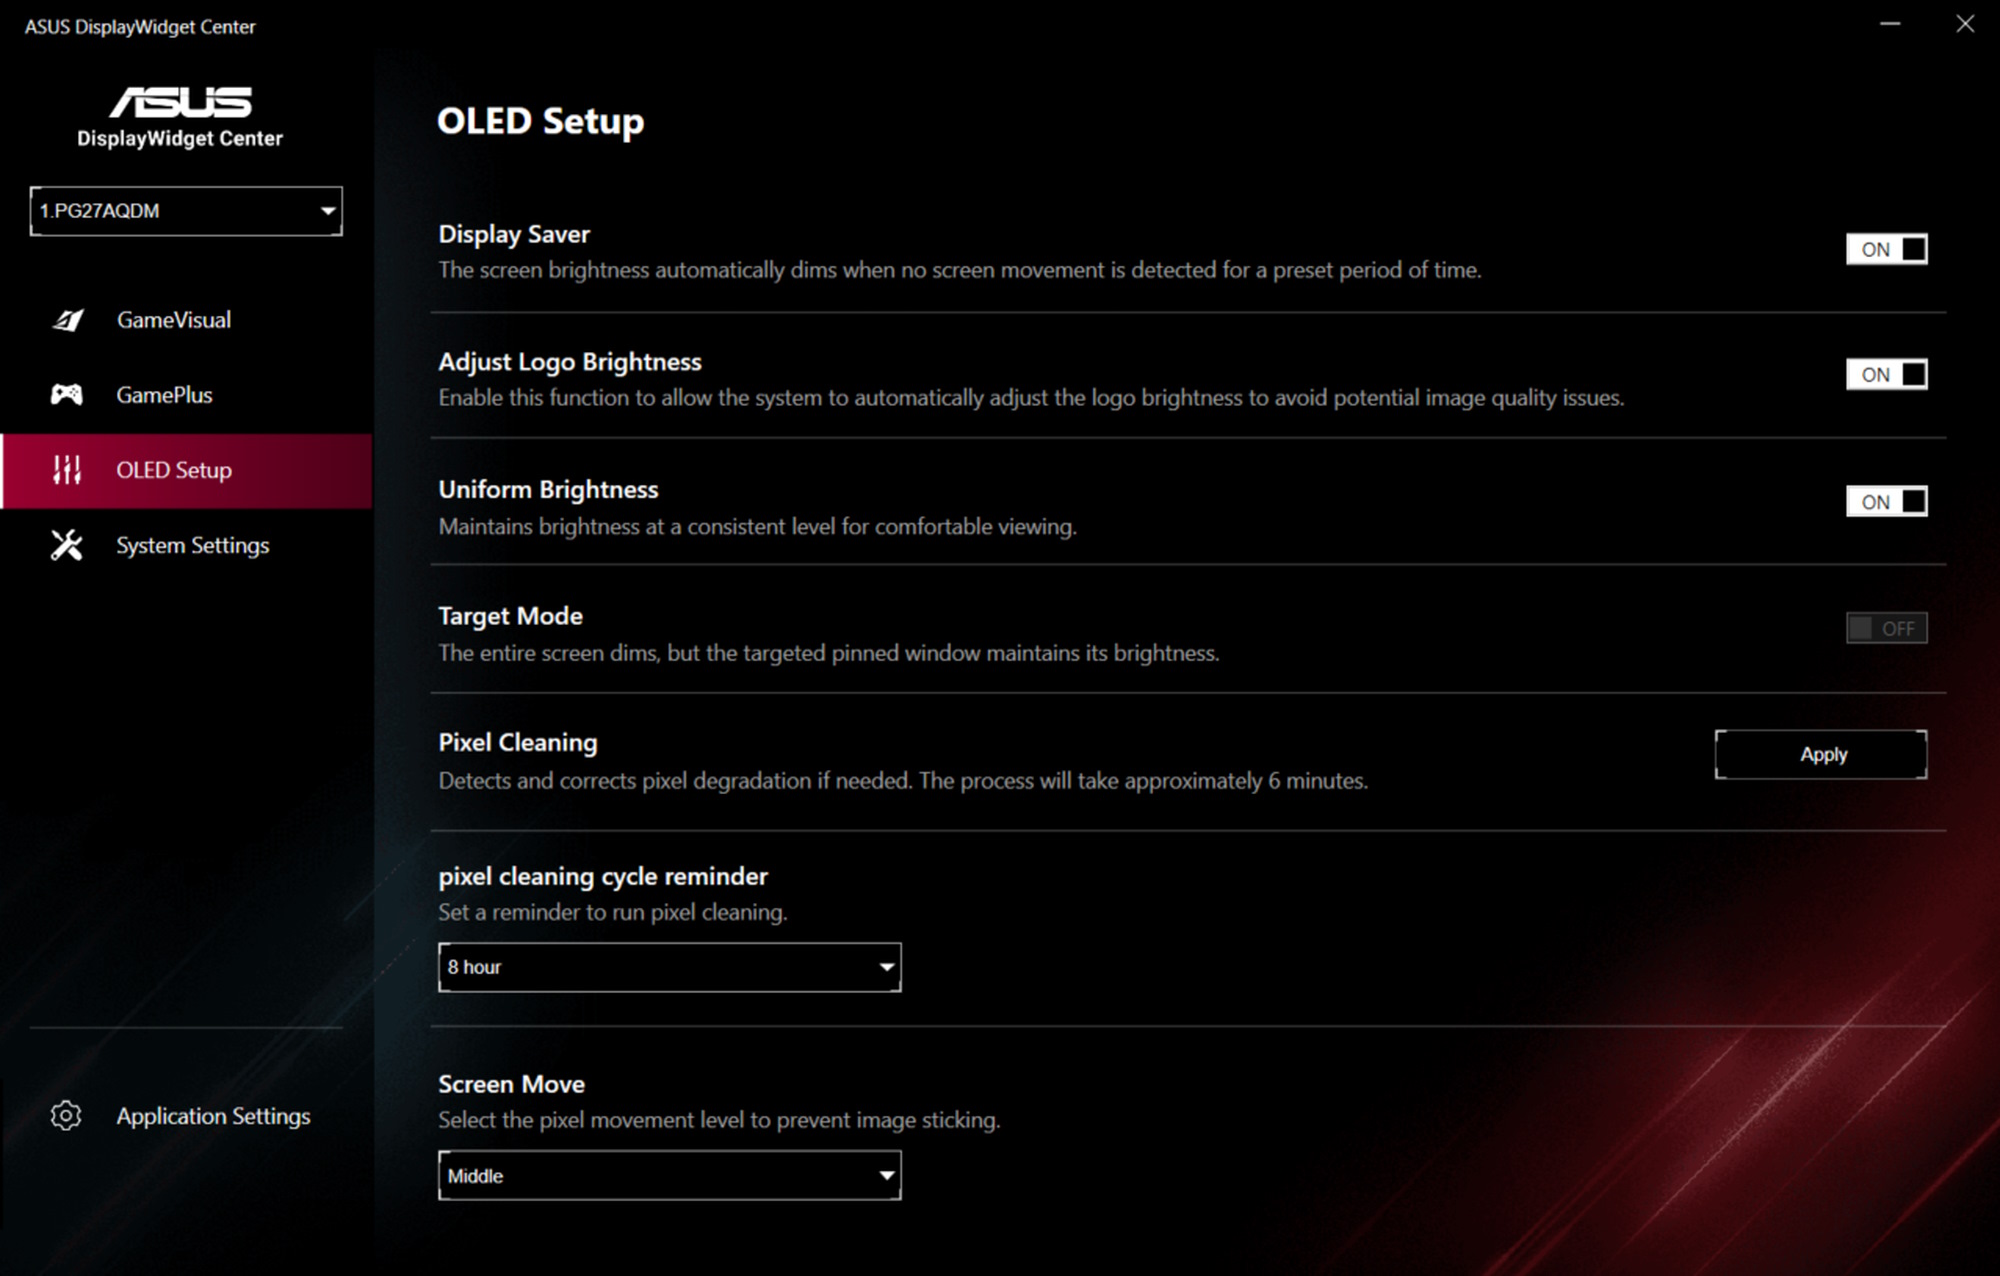 A screenshot of the OLED Care menu in the ASUS DisplayWidget Center app